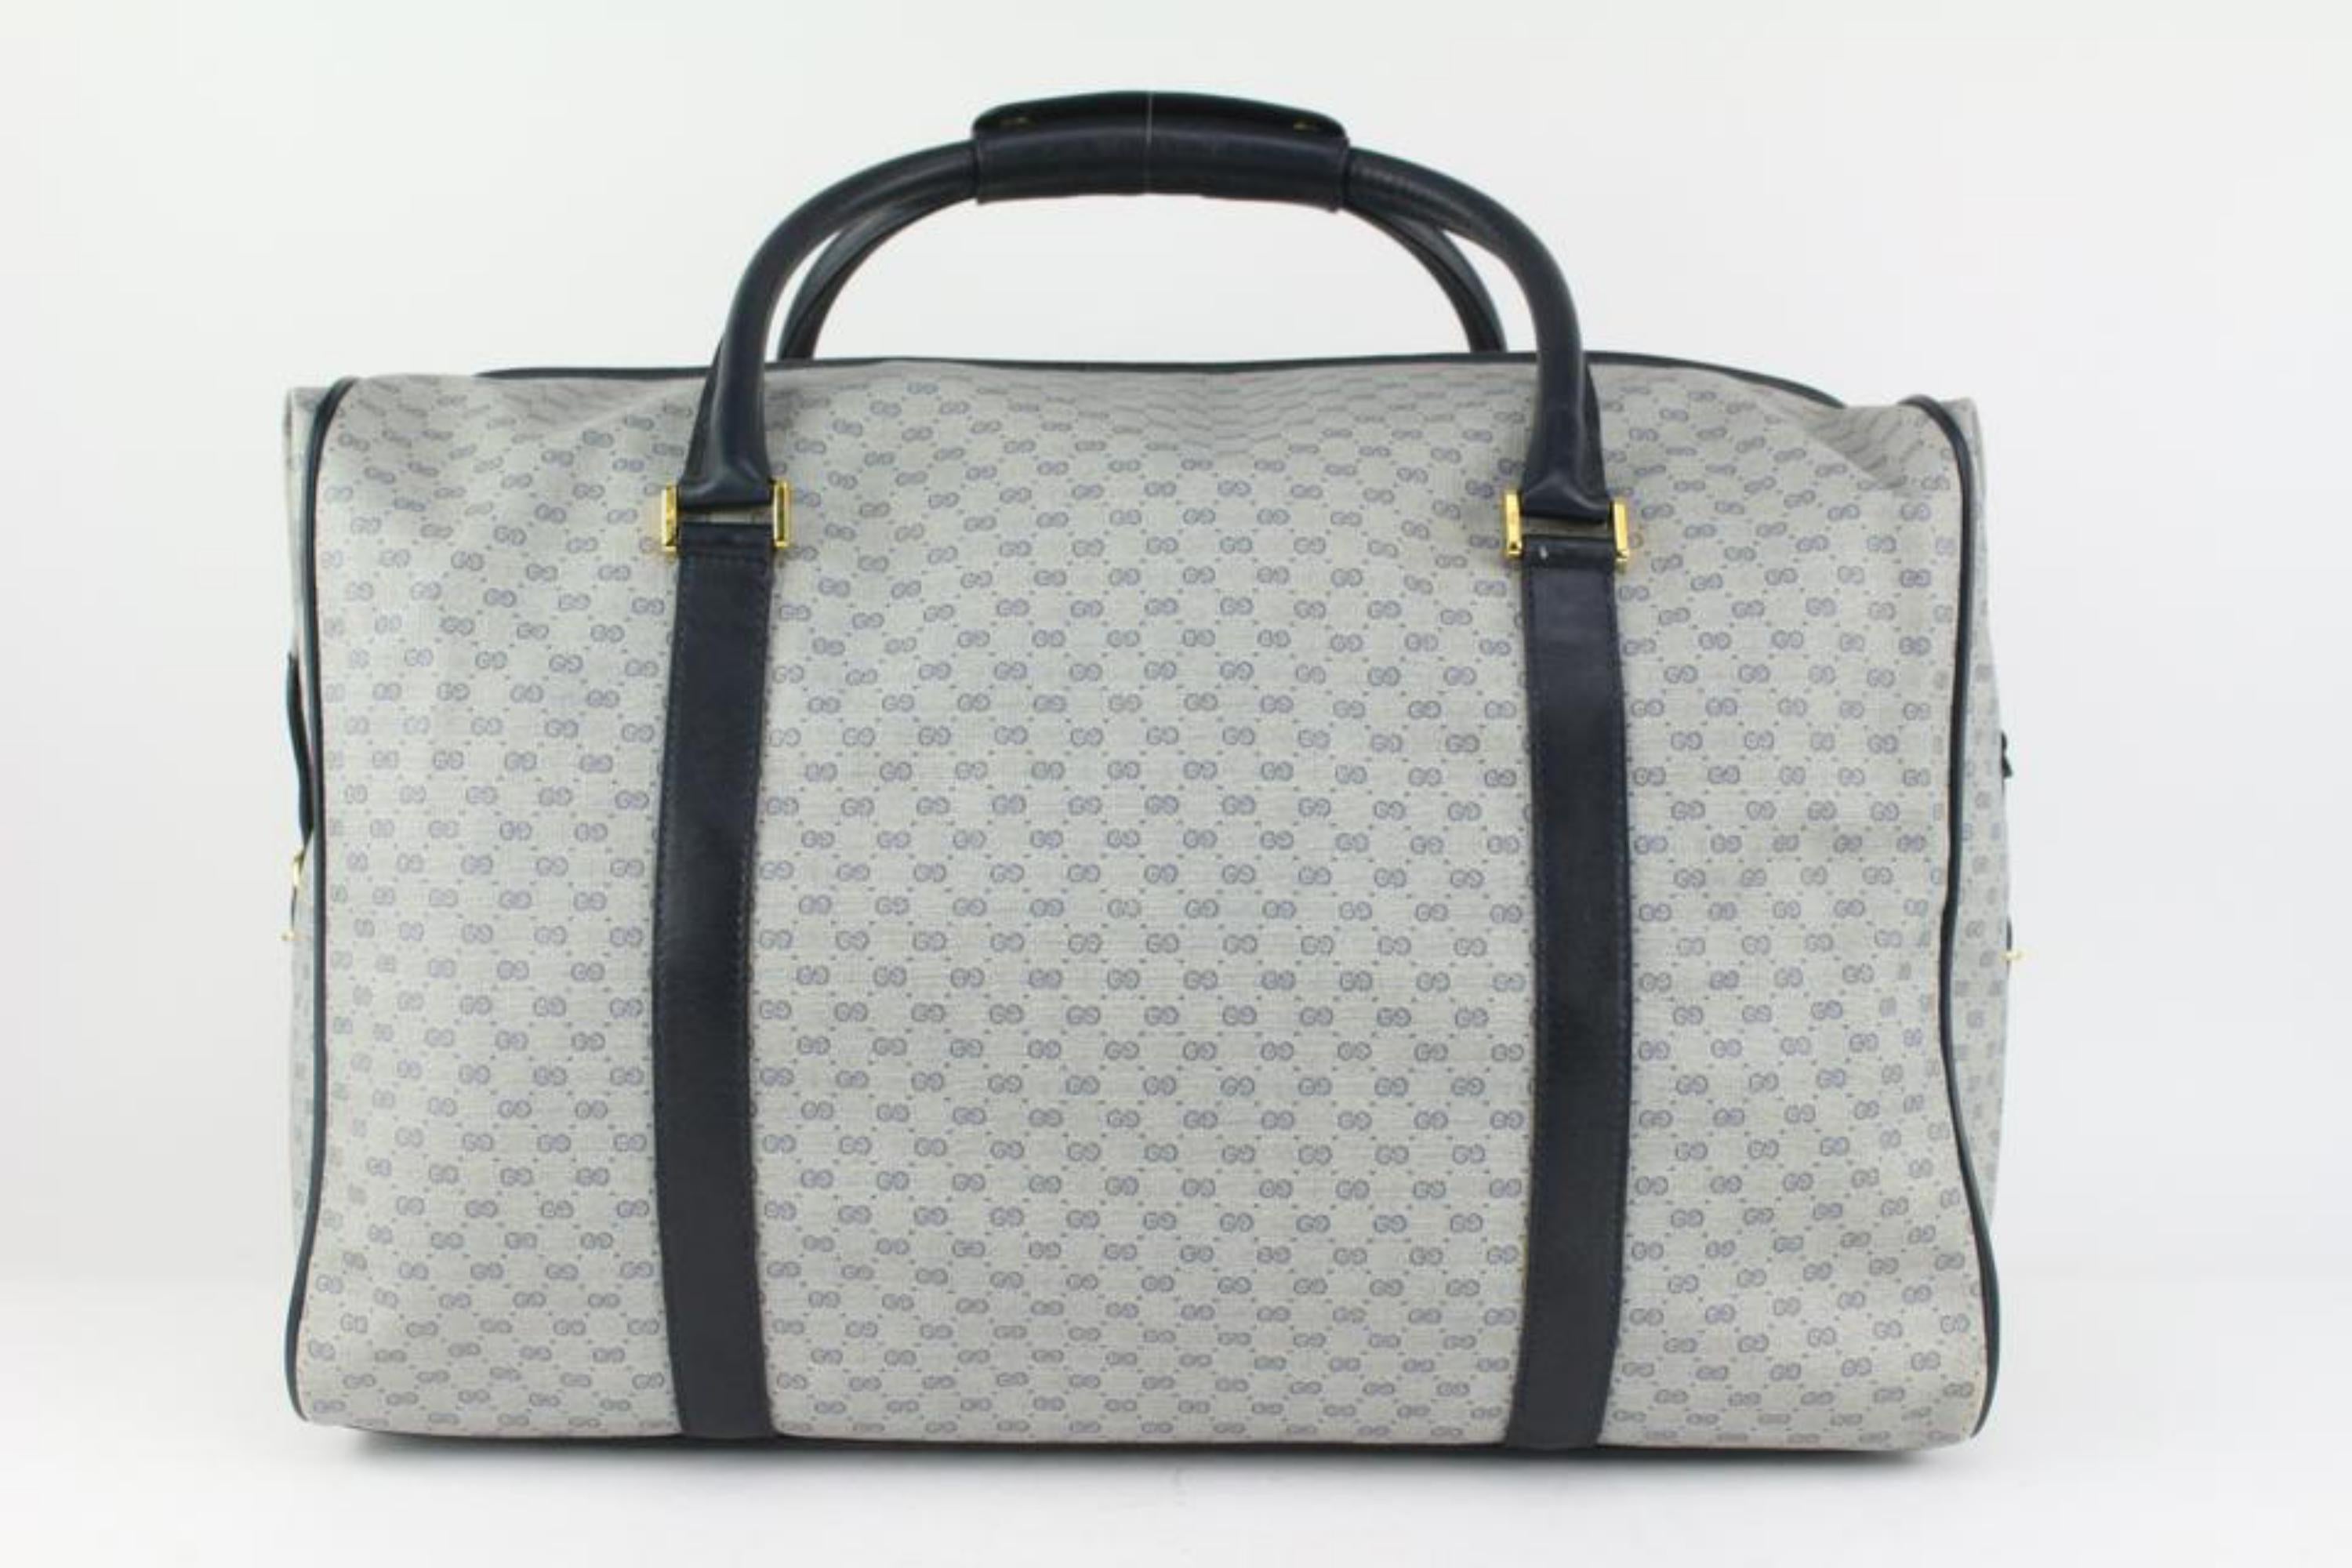 Gucci Navy Micro GG Monogram Carry On Duffle Bag 1118g32 1